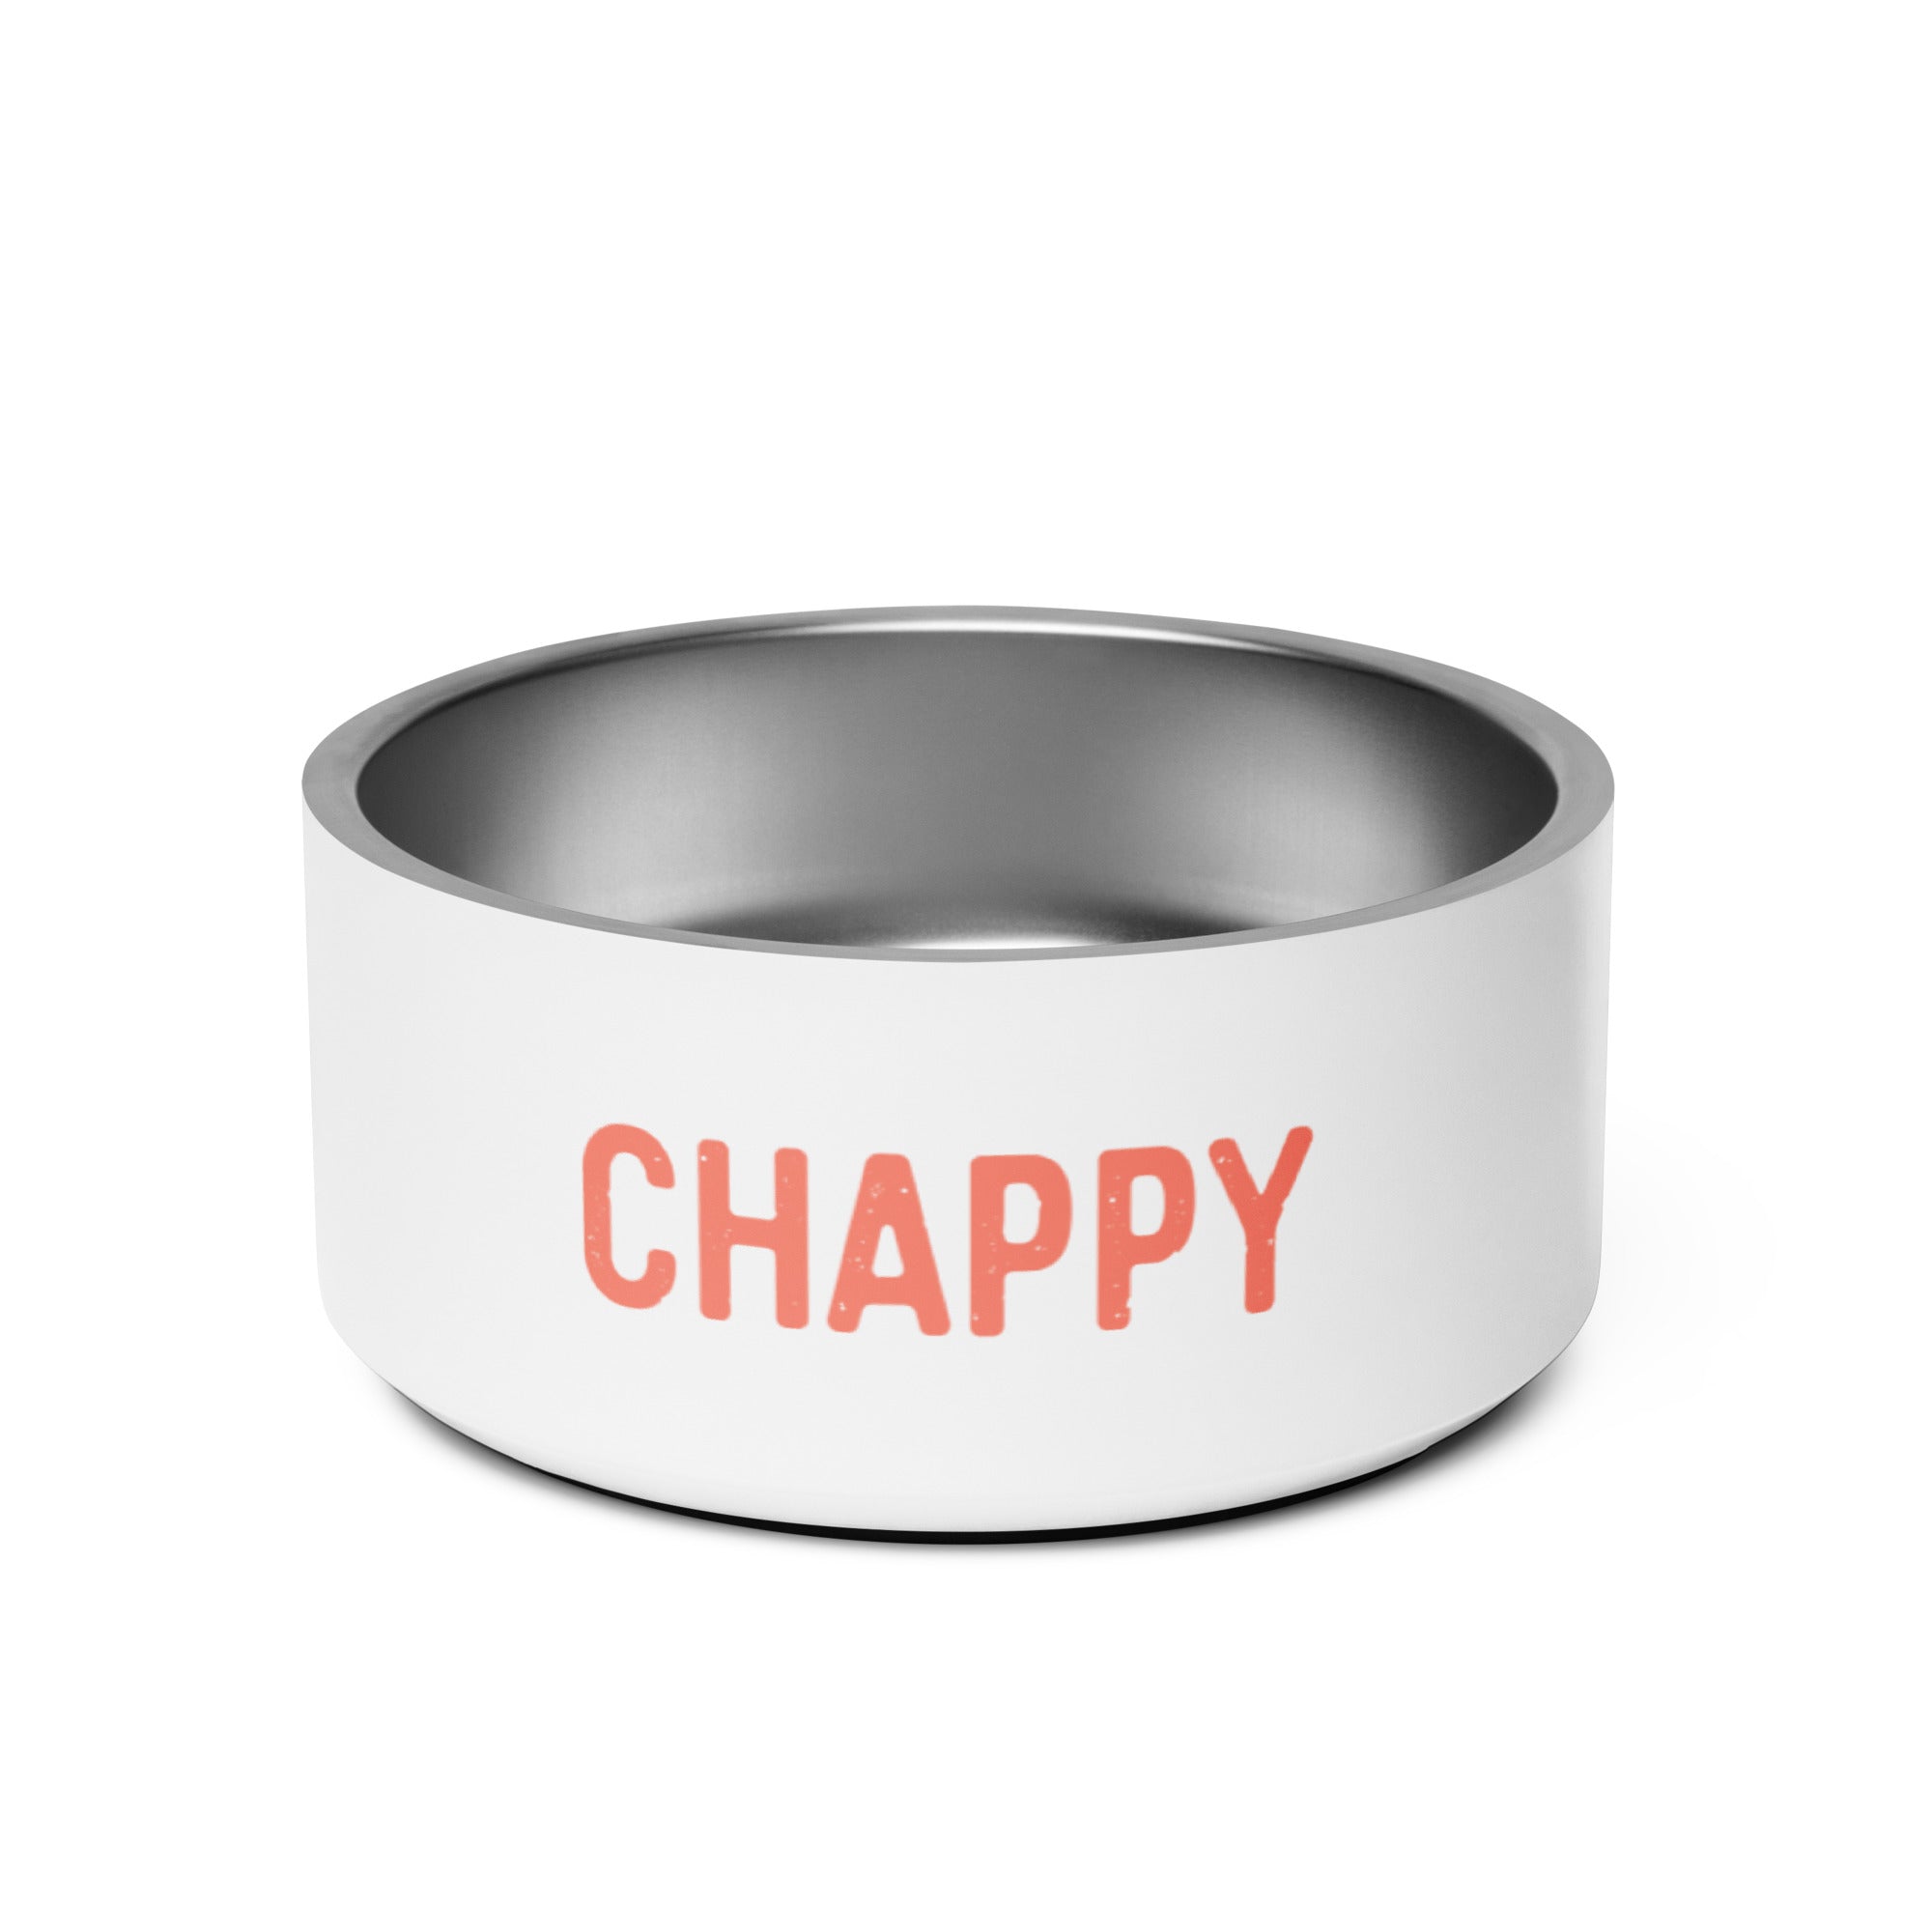 The Chappy Dish